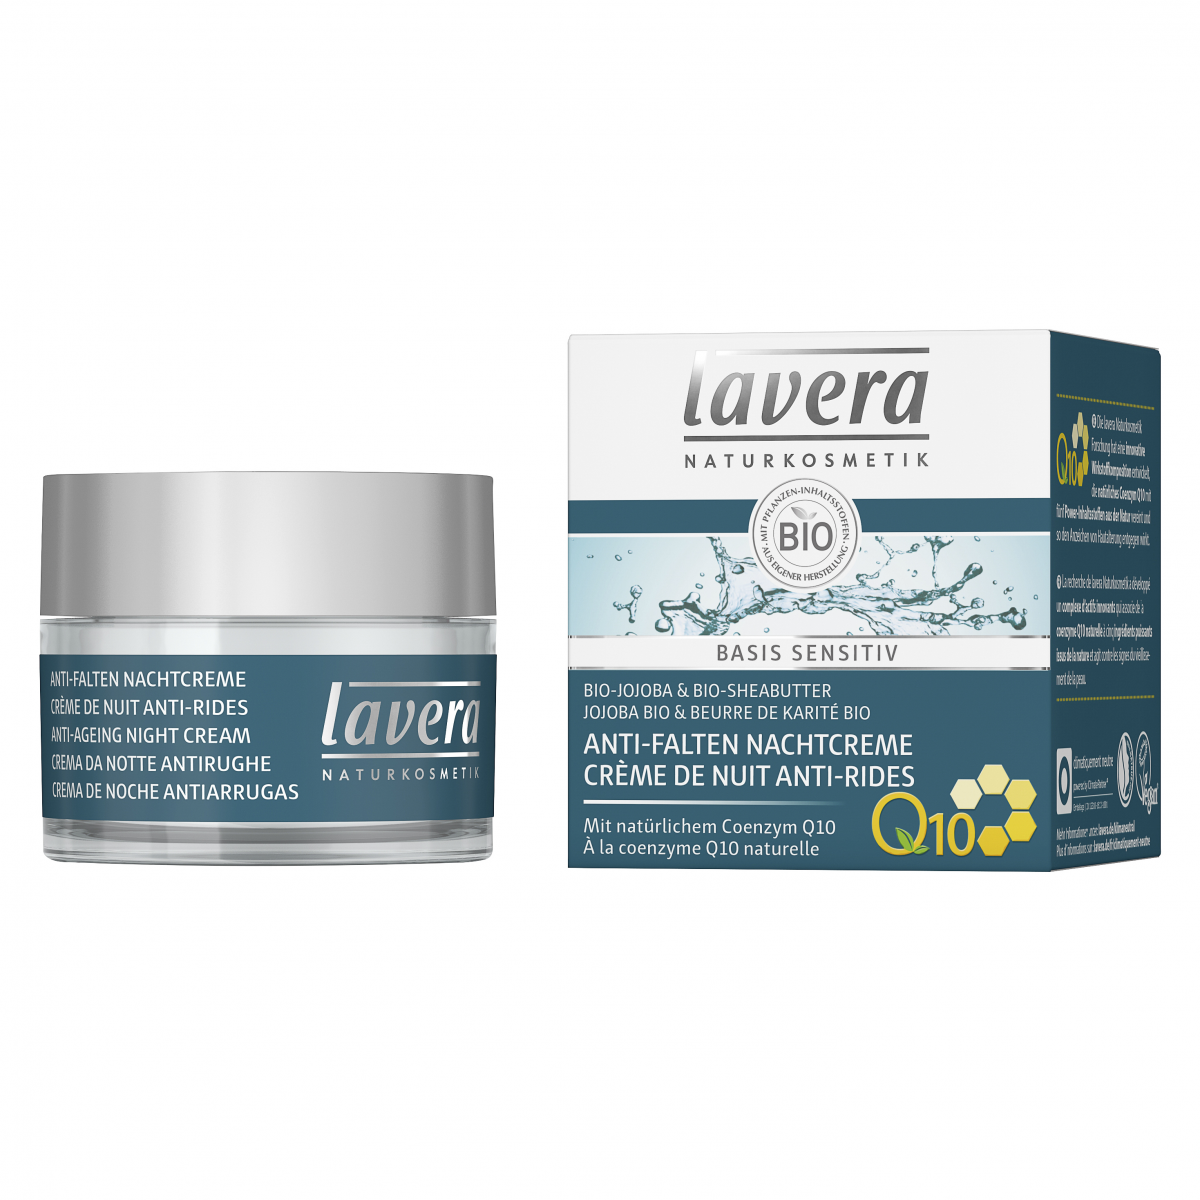 Lavera - Anti-Falten Nachtcreme Q10 basis sensitiv